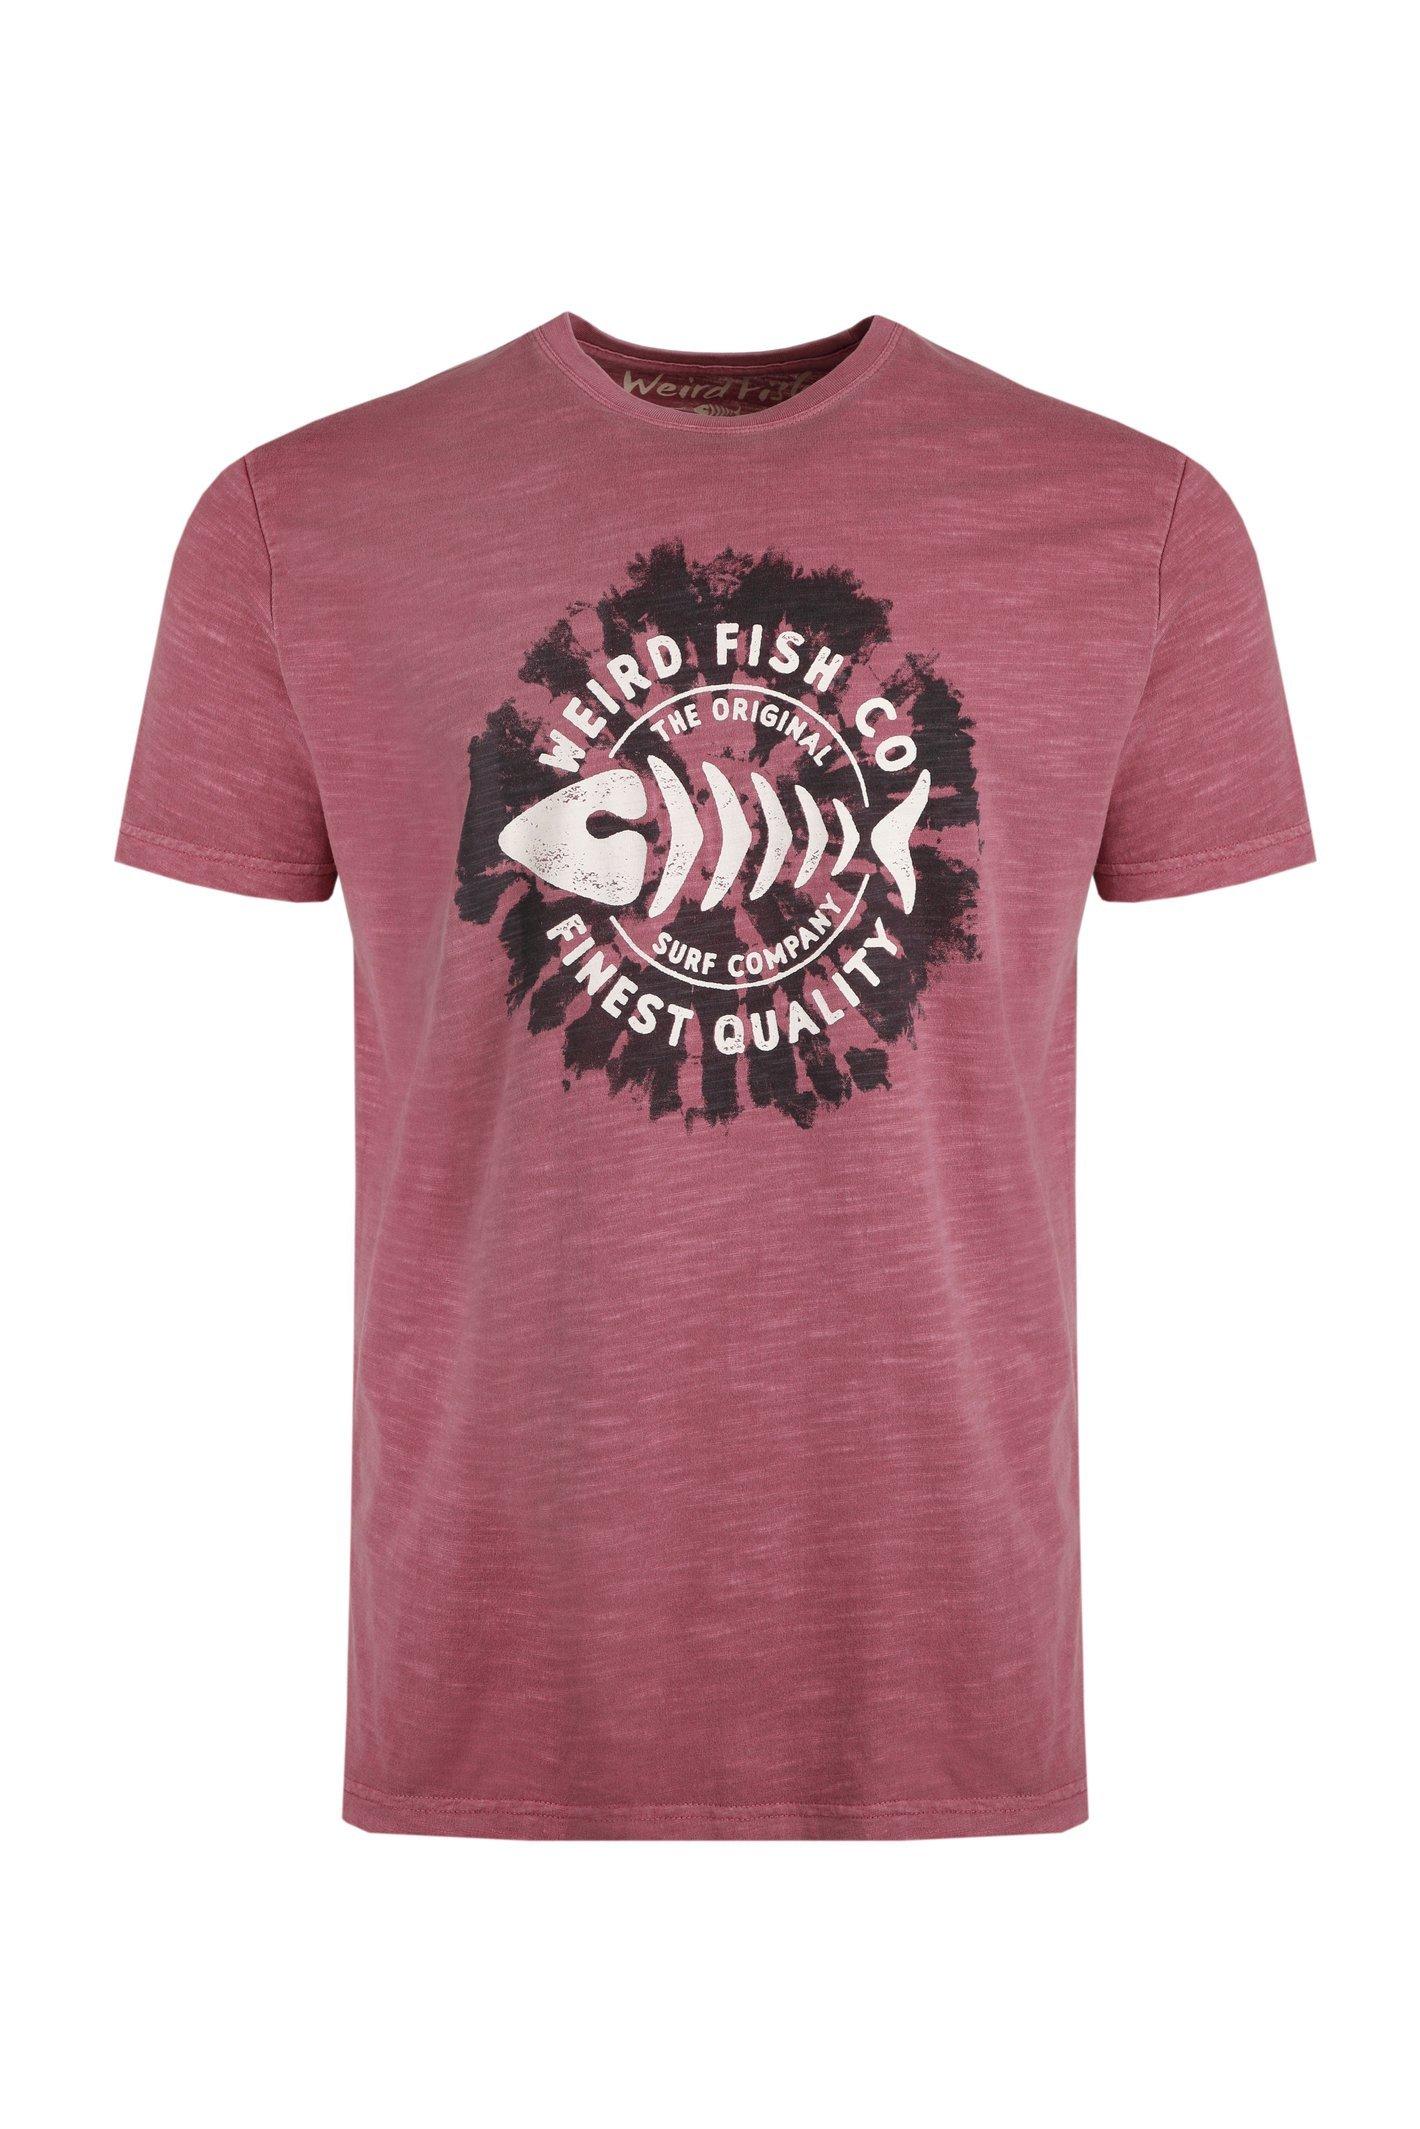 T-Shirts | Surfside Tie Dye Graphic T-Shirt | Weird Fish